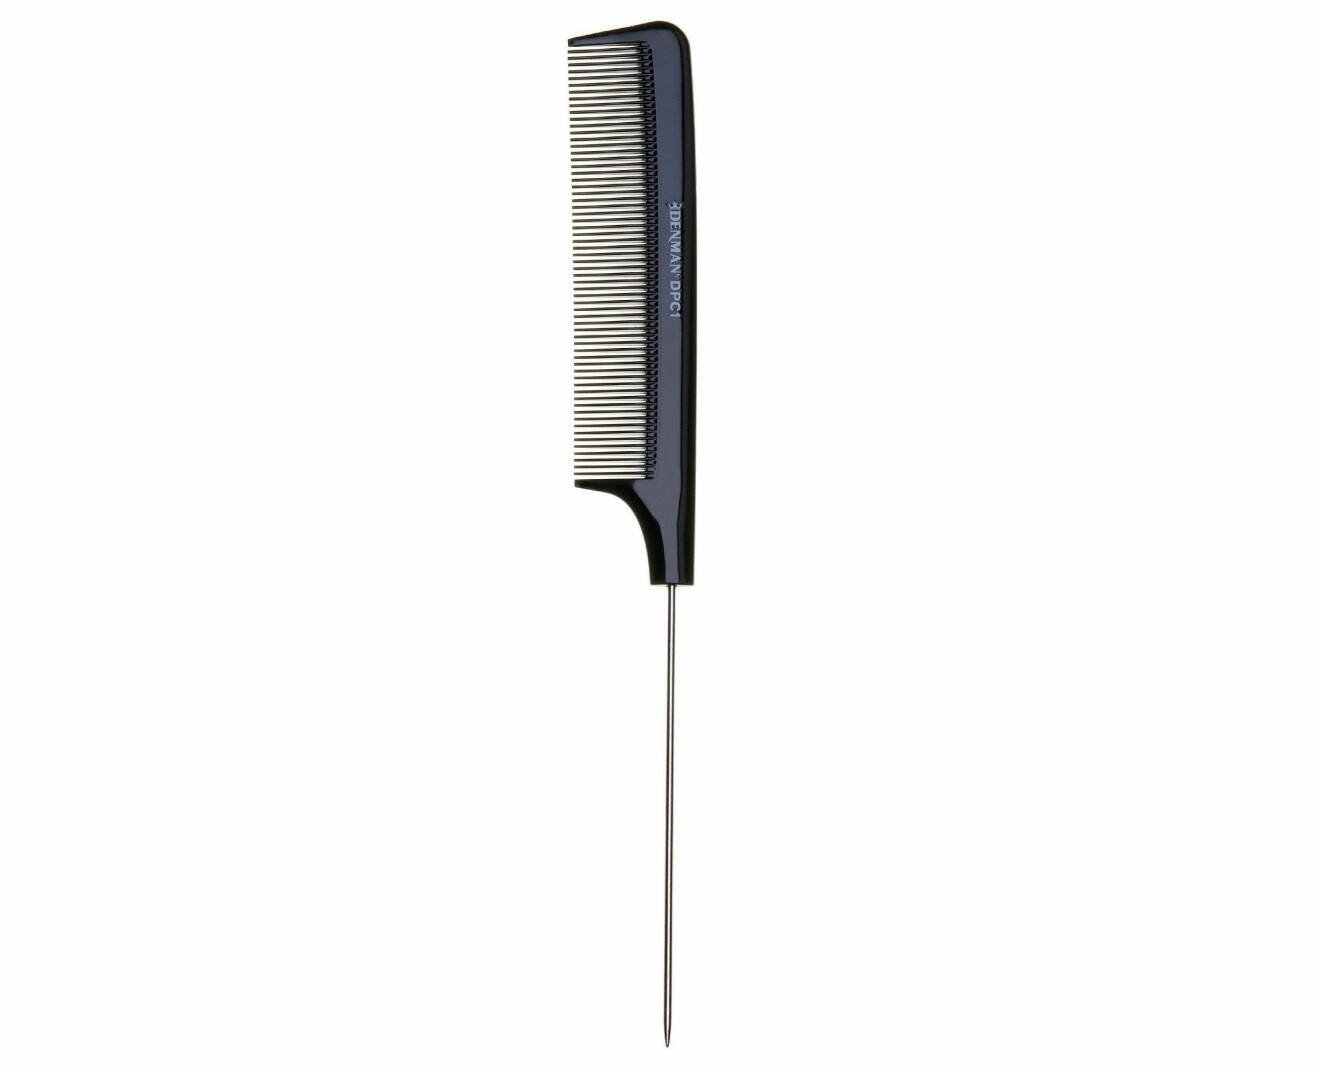 Pin Tail Comb Black från Denman.